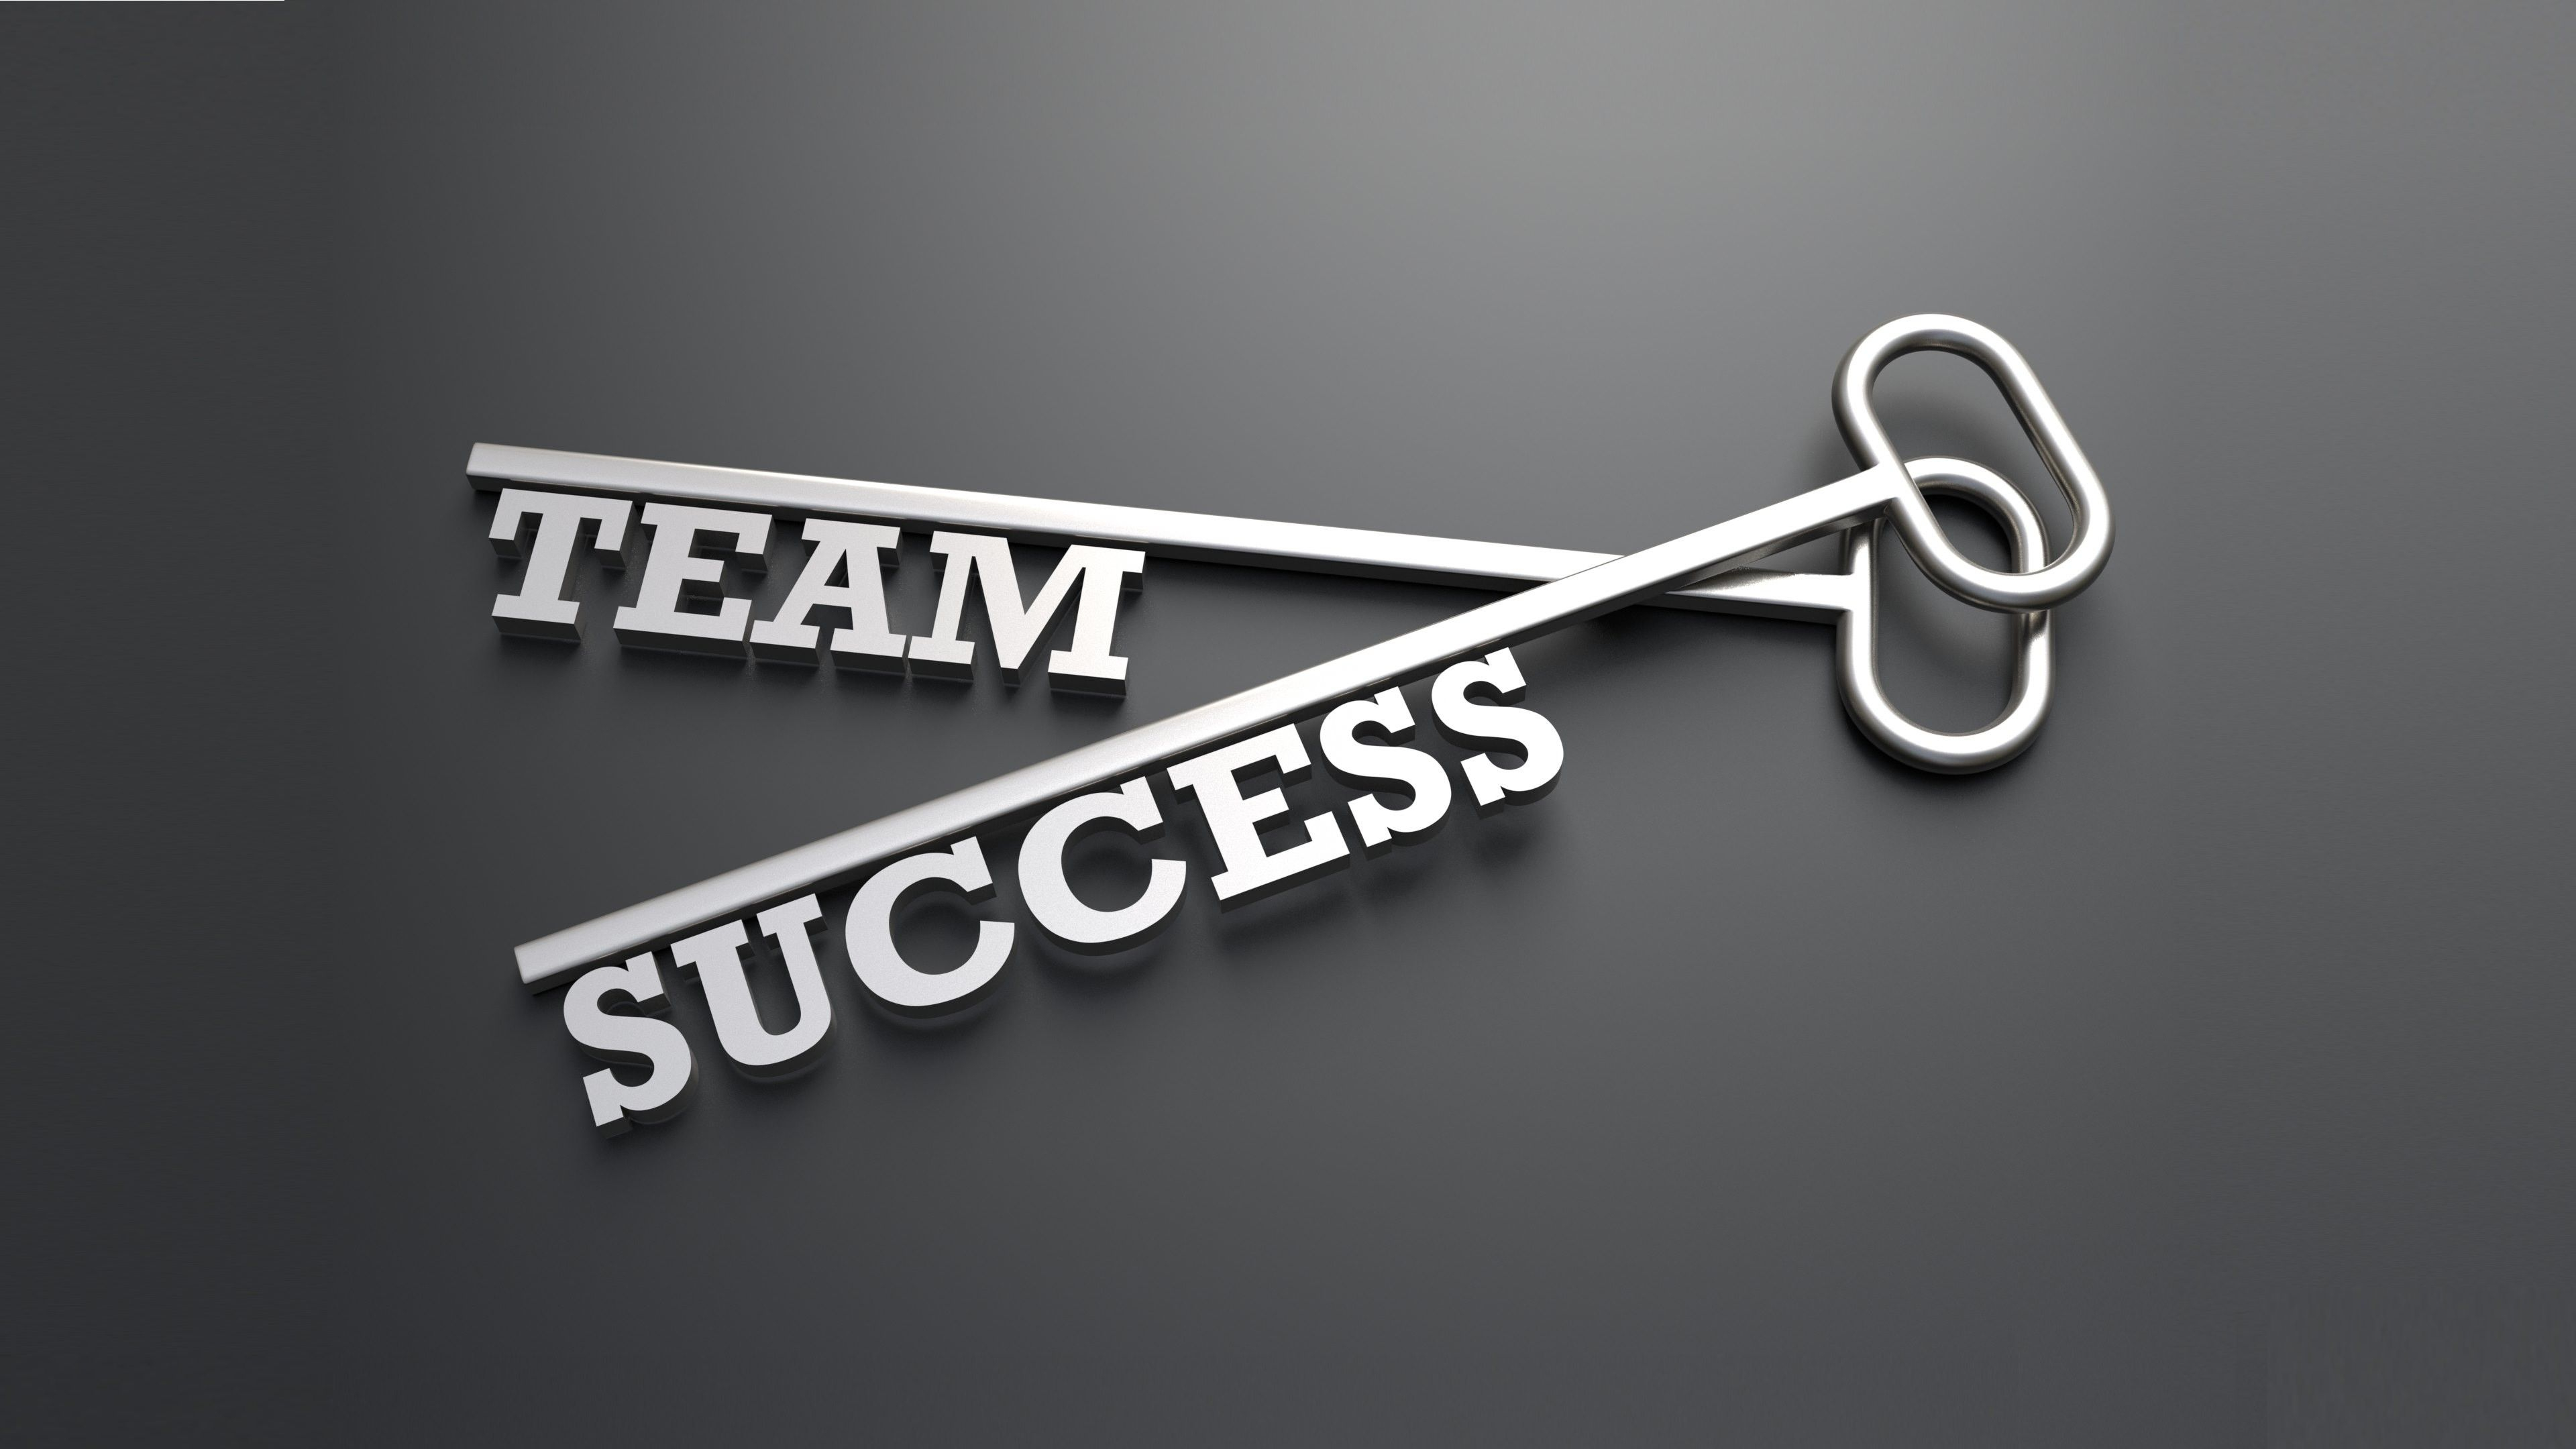 3840x2160 Success HD Wallpaper | Team success, Business process management, Multi level marketing